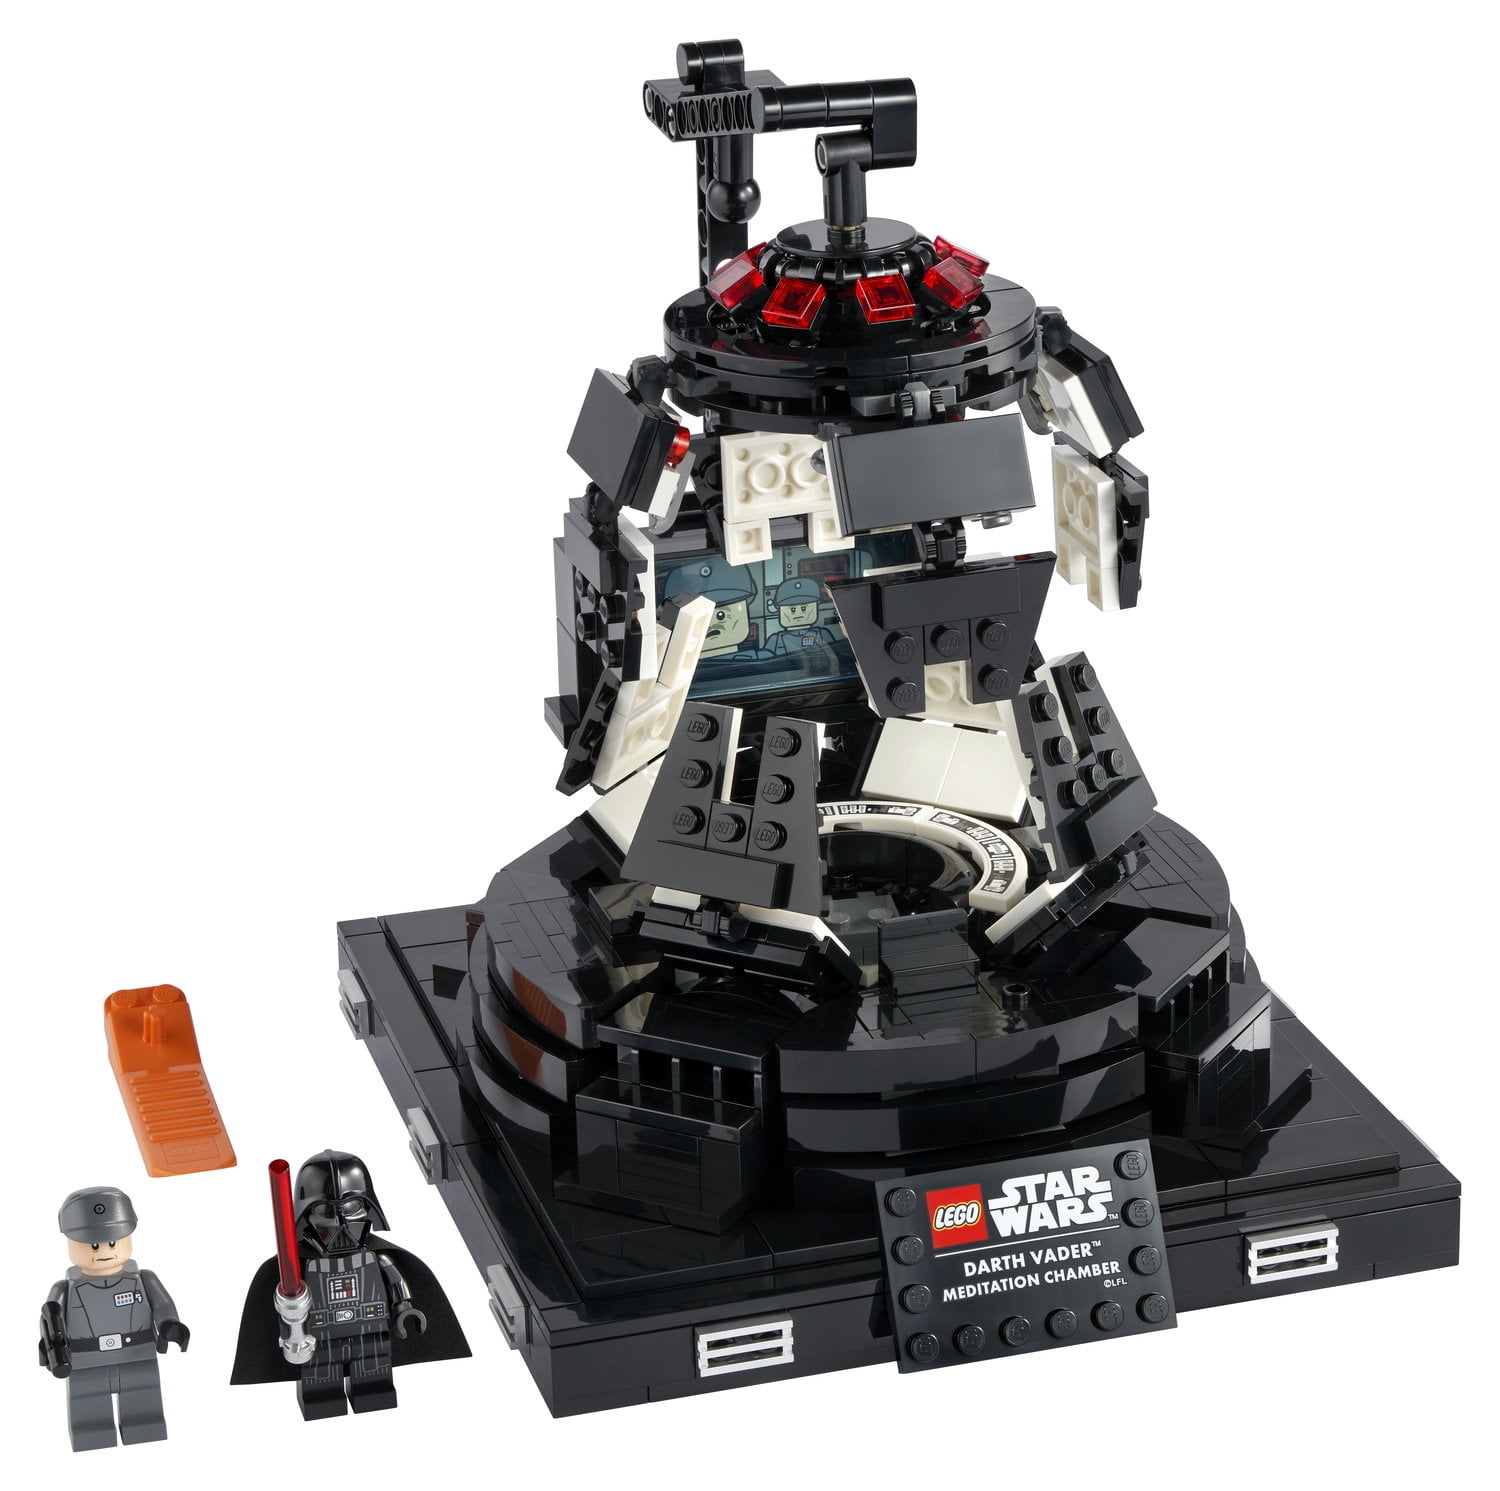 Lego Star Wars Darth Vader Meditation Chamber Fun Creative Building Toy 663 Pieces Walmart Com